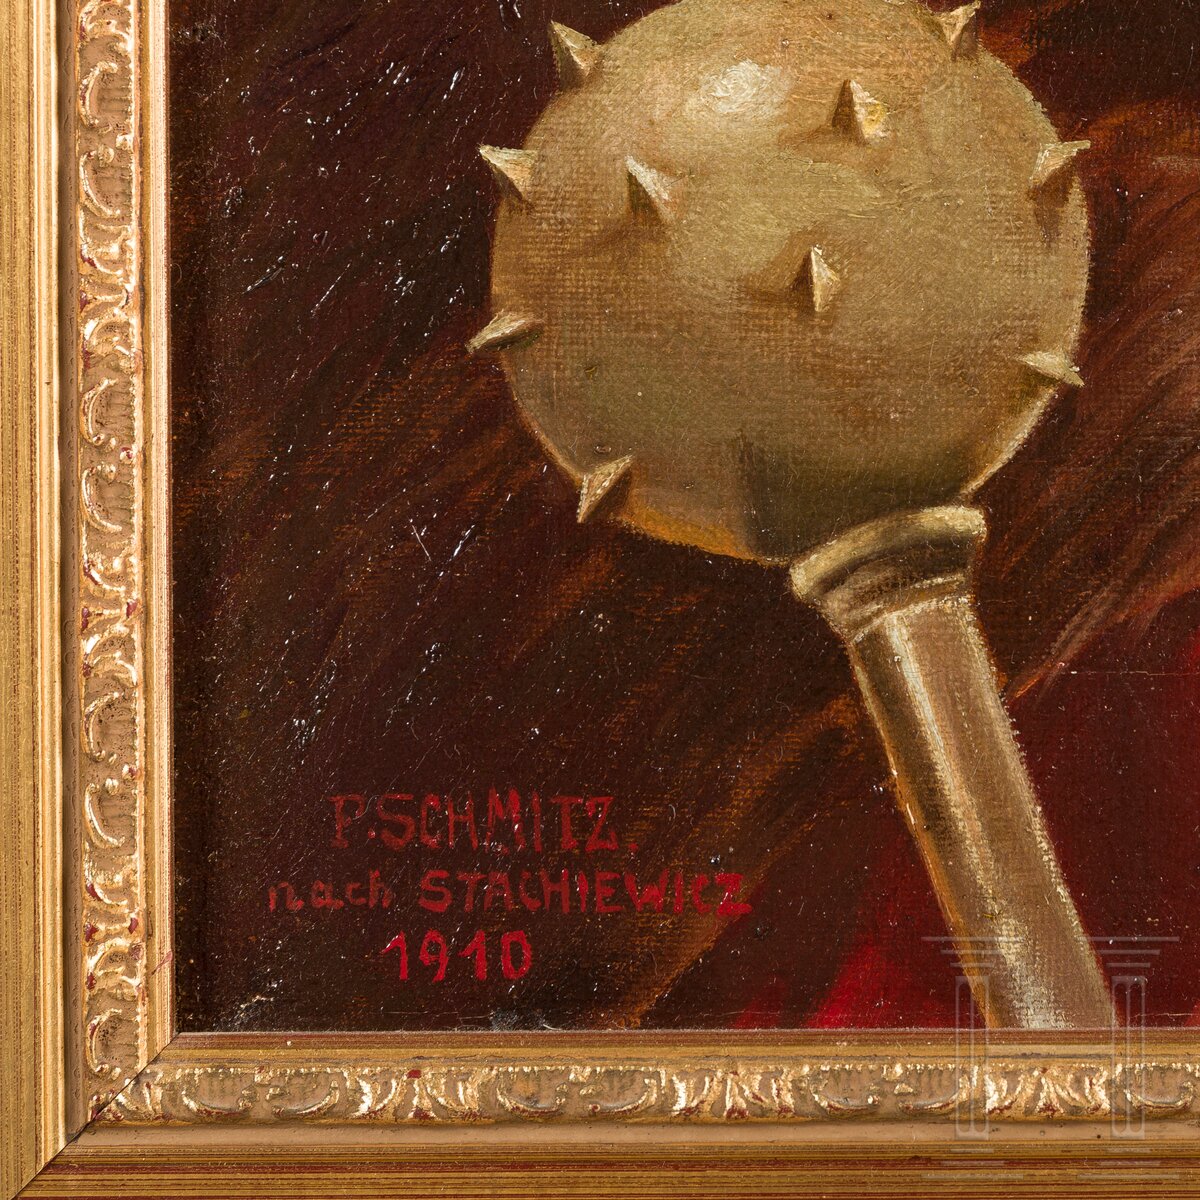 Bohdan Chmelnicki - Gemälde nach Piotr Stachiewicz, datiert 1910 - Image 2 of 5